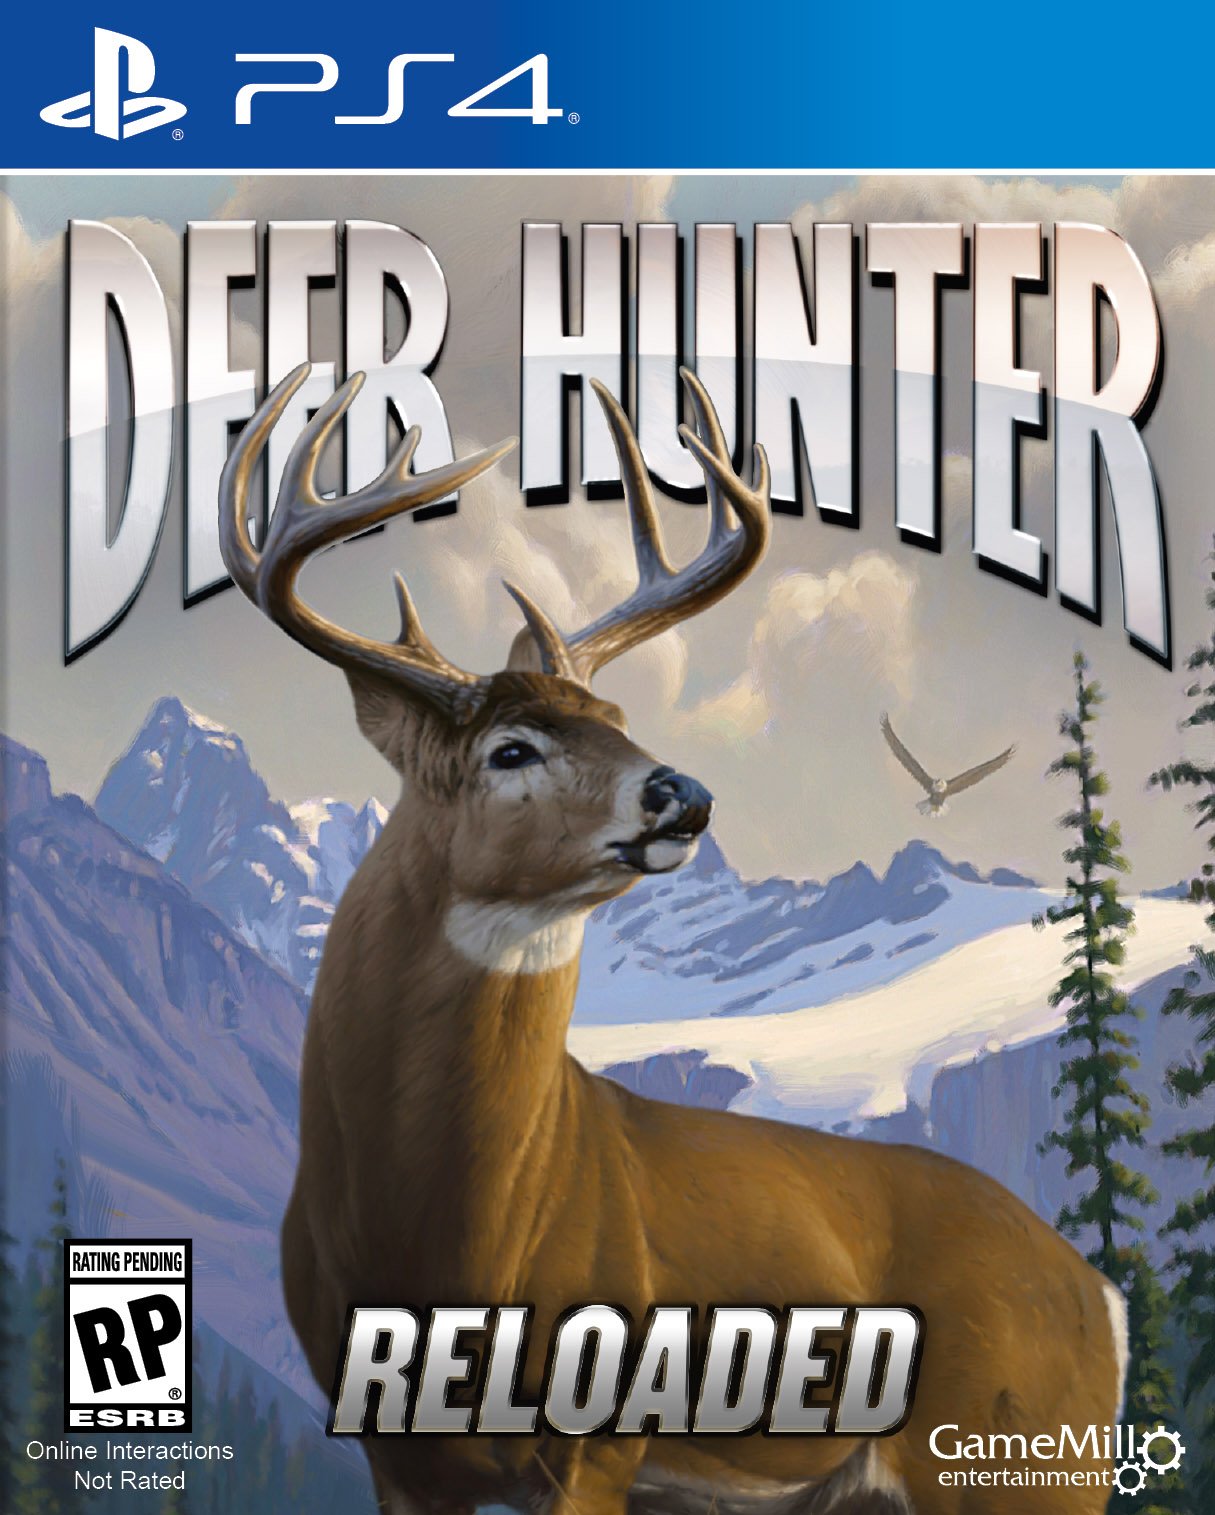 Deer Hunting 19: Hunter Safari PRO 3D download the new for apple